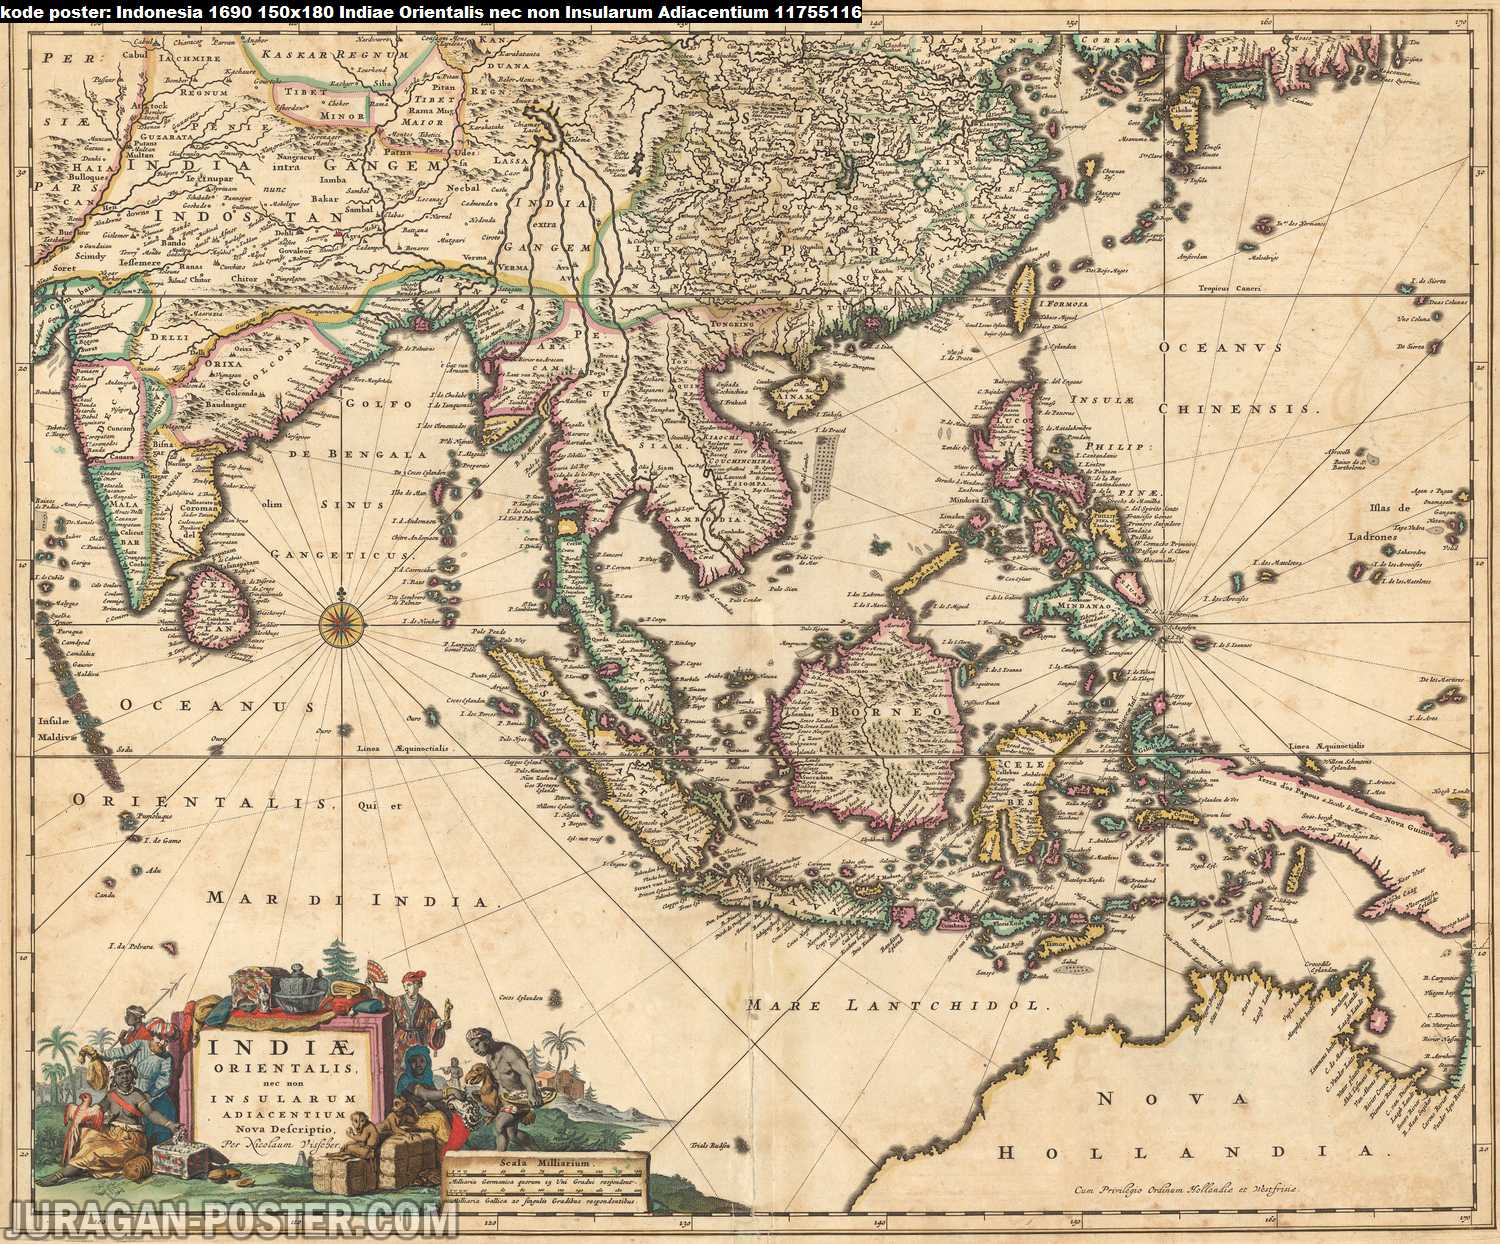 peta indonesia kuno tahun 1690